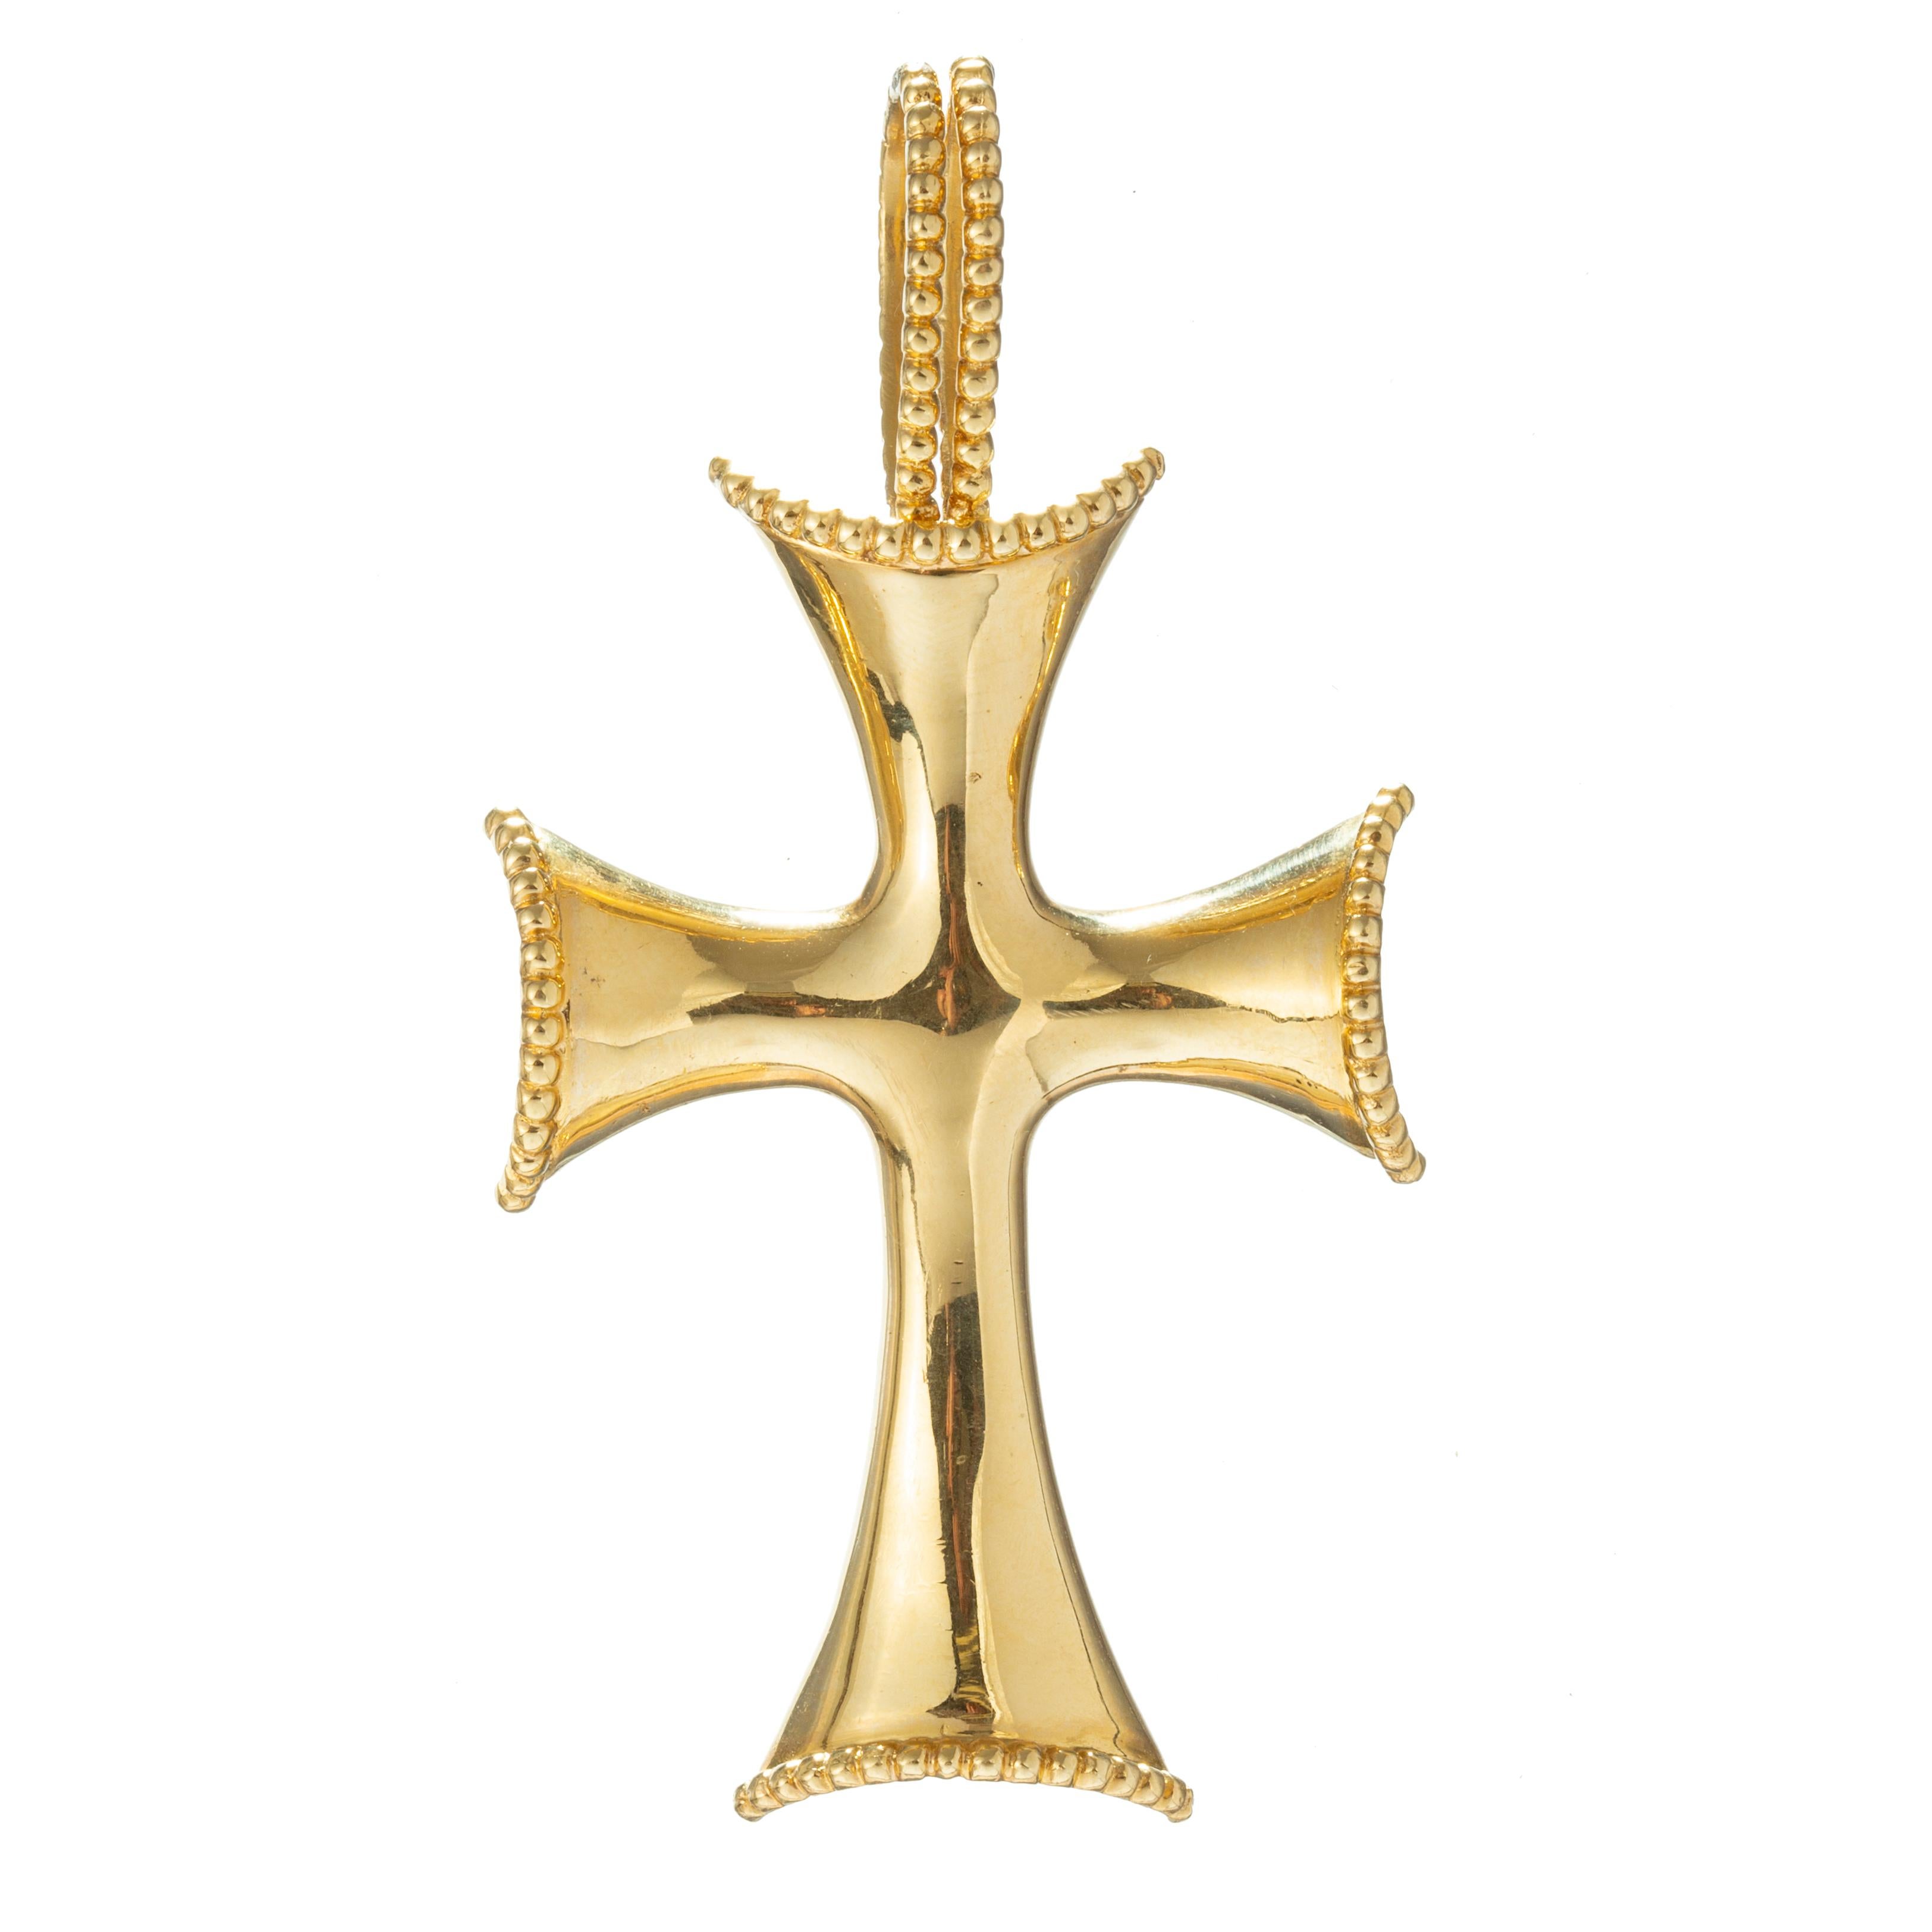 Tiffany & Co. 18k yellow gold cross pendant measuring 3.5